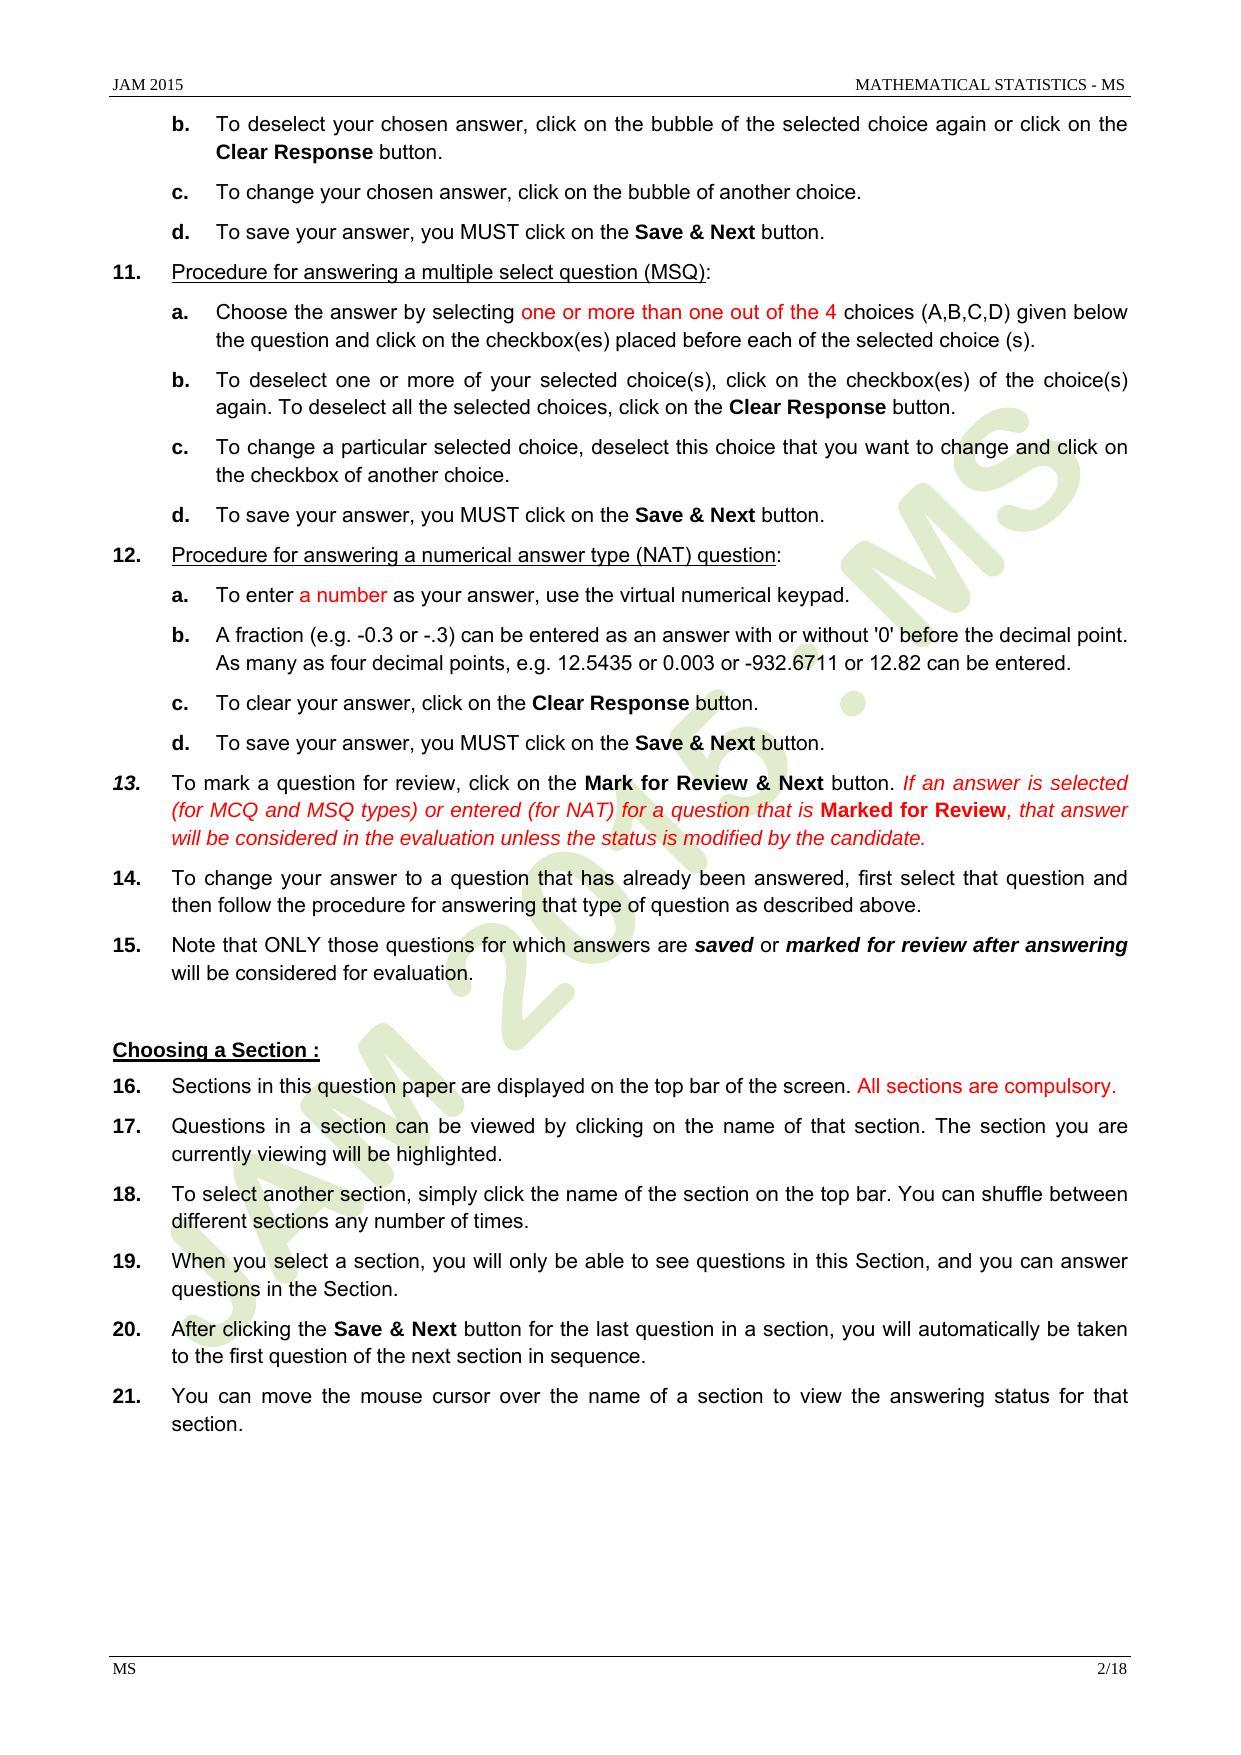 JAM 2015: MS Question Paper - Page 2